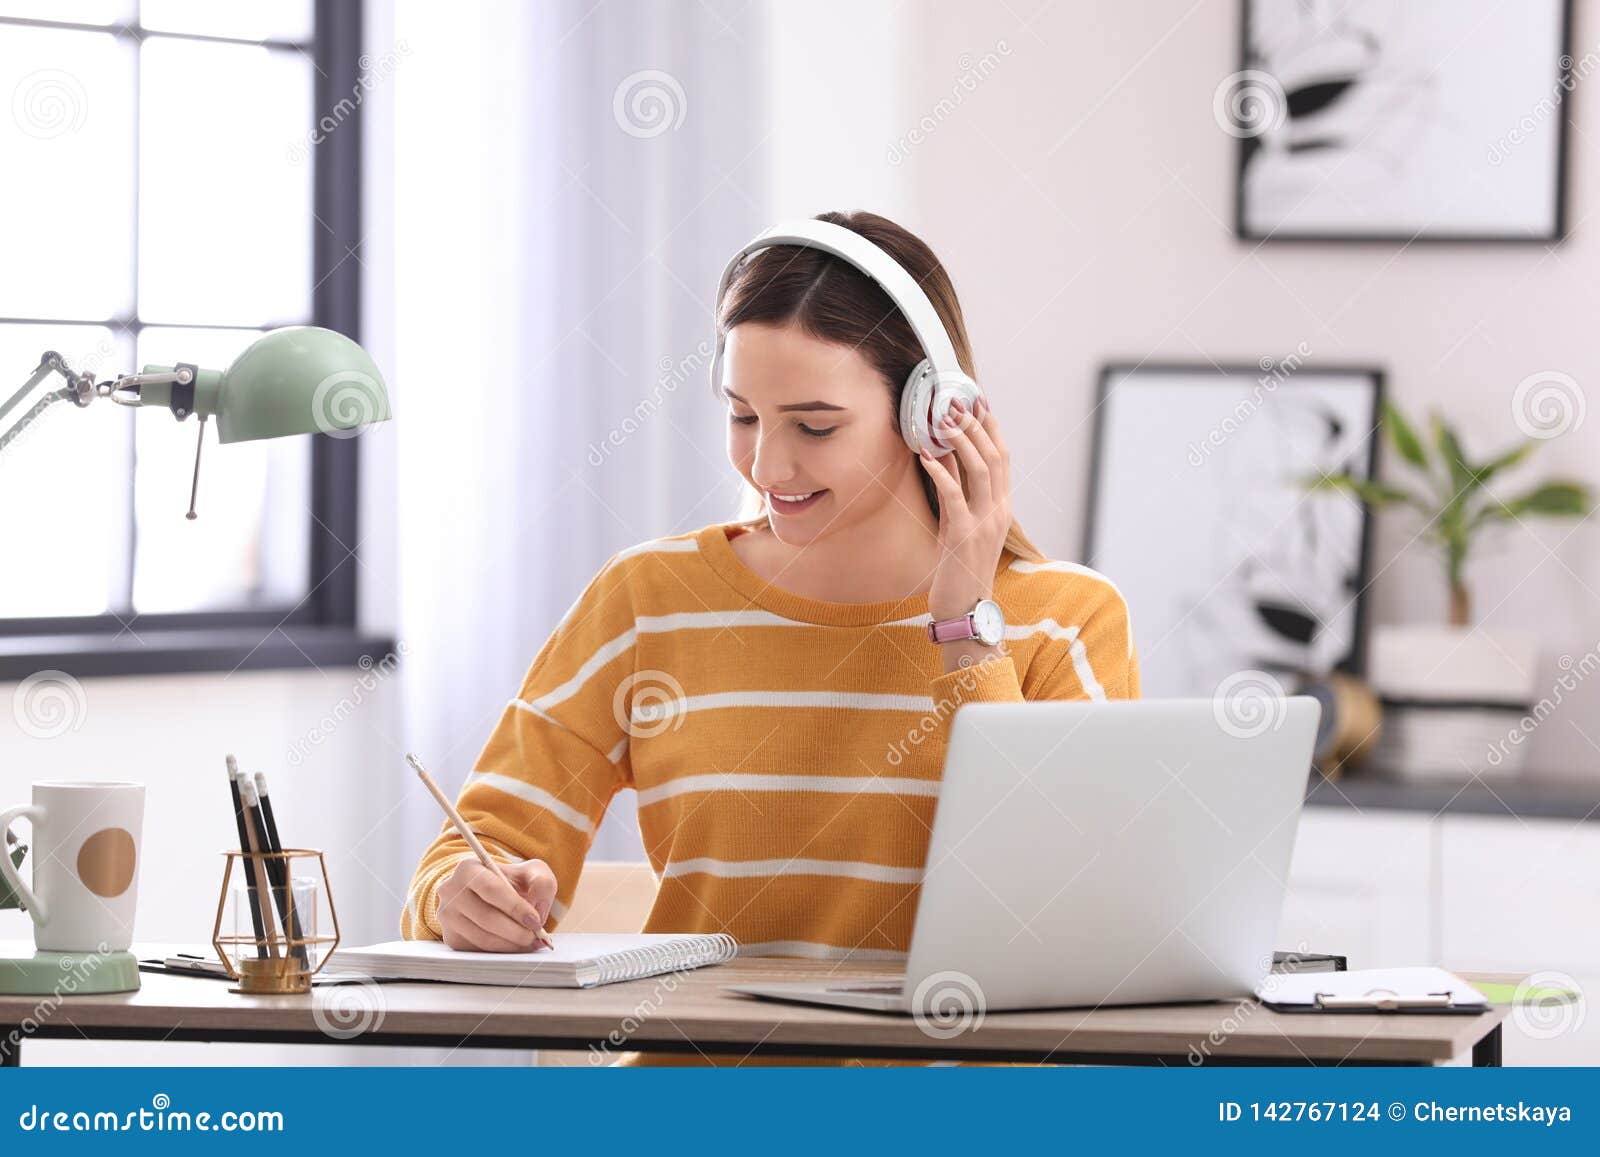 listen to music while doing homework